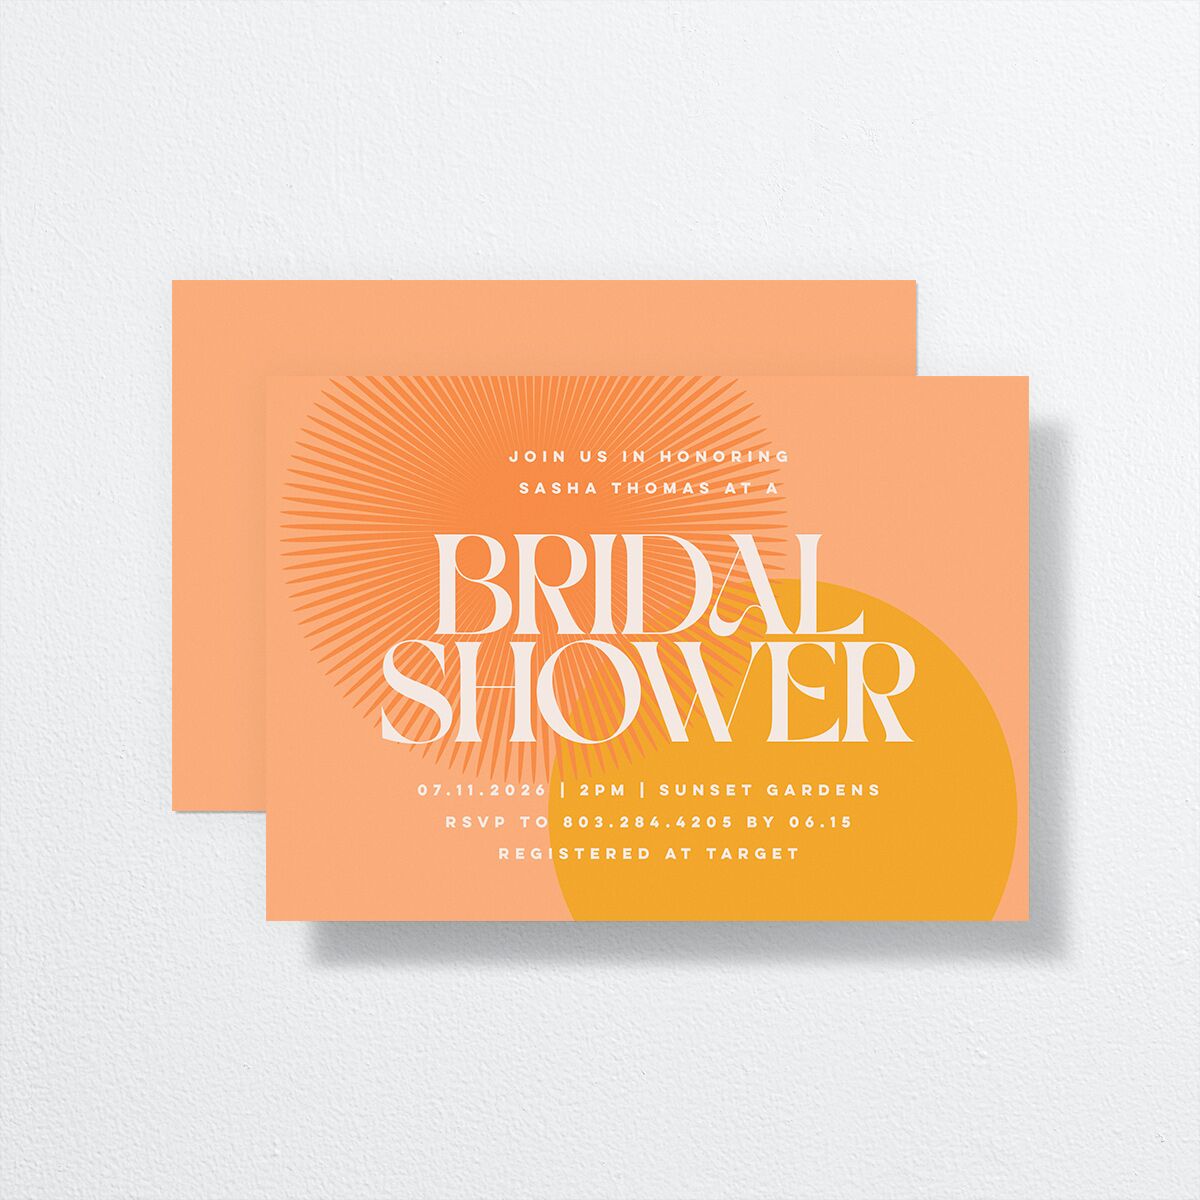 Retro Sunburst Bridal Shower Invitations front-and-back in orange